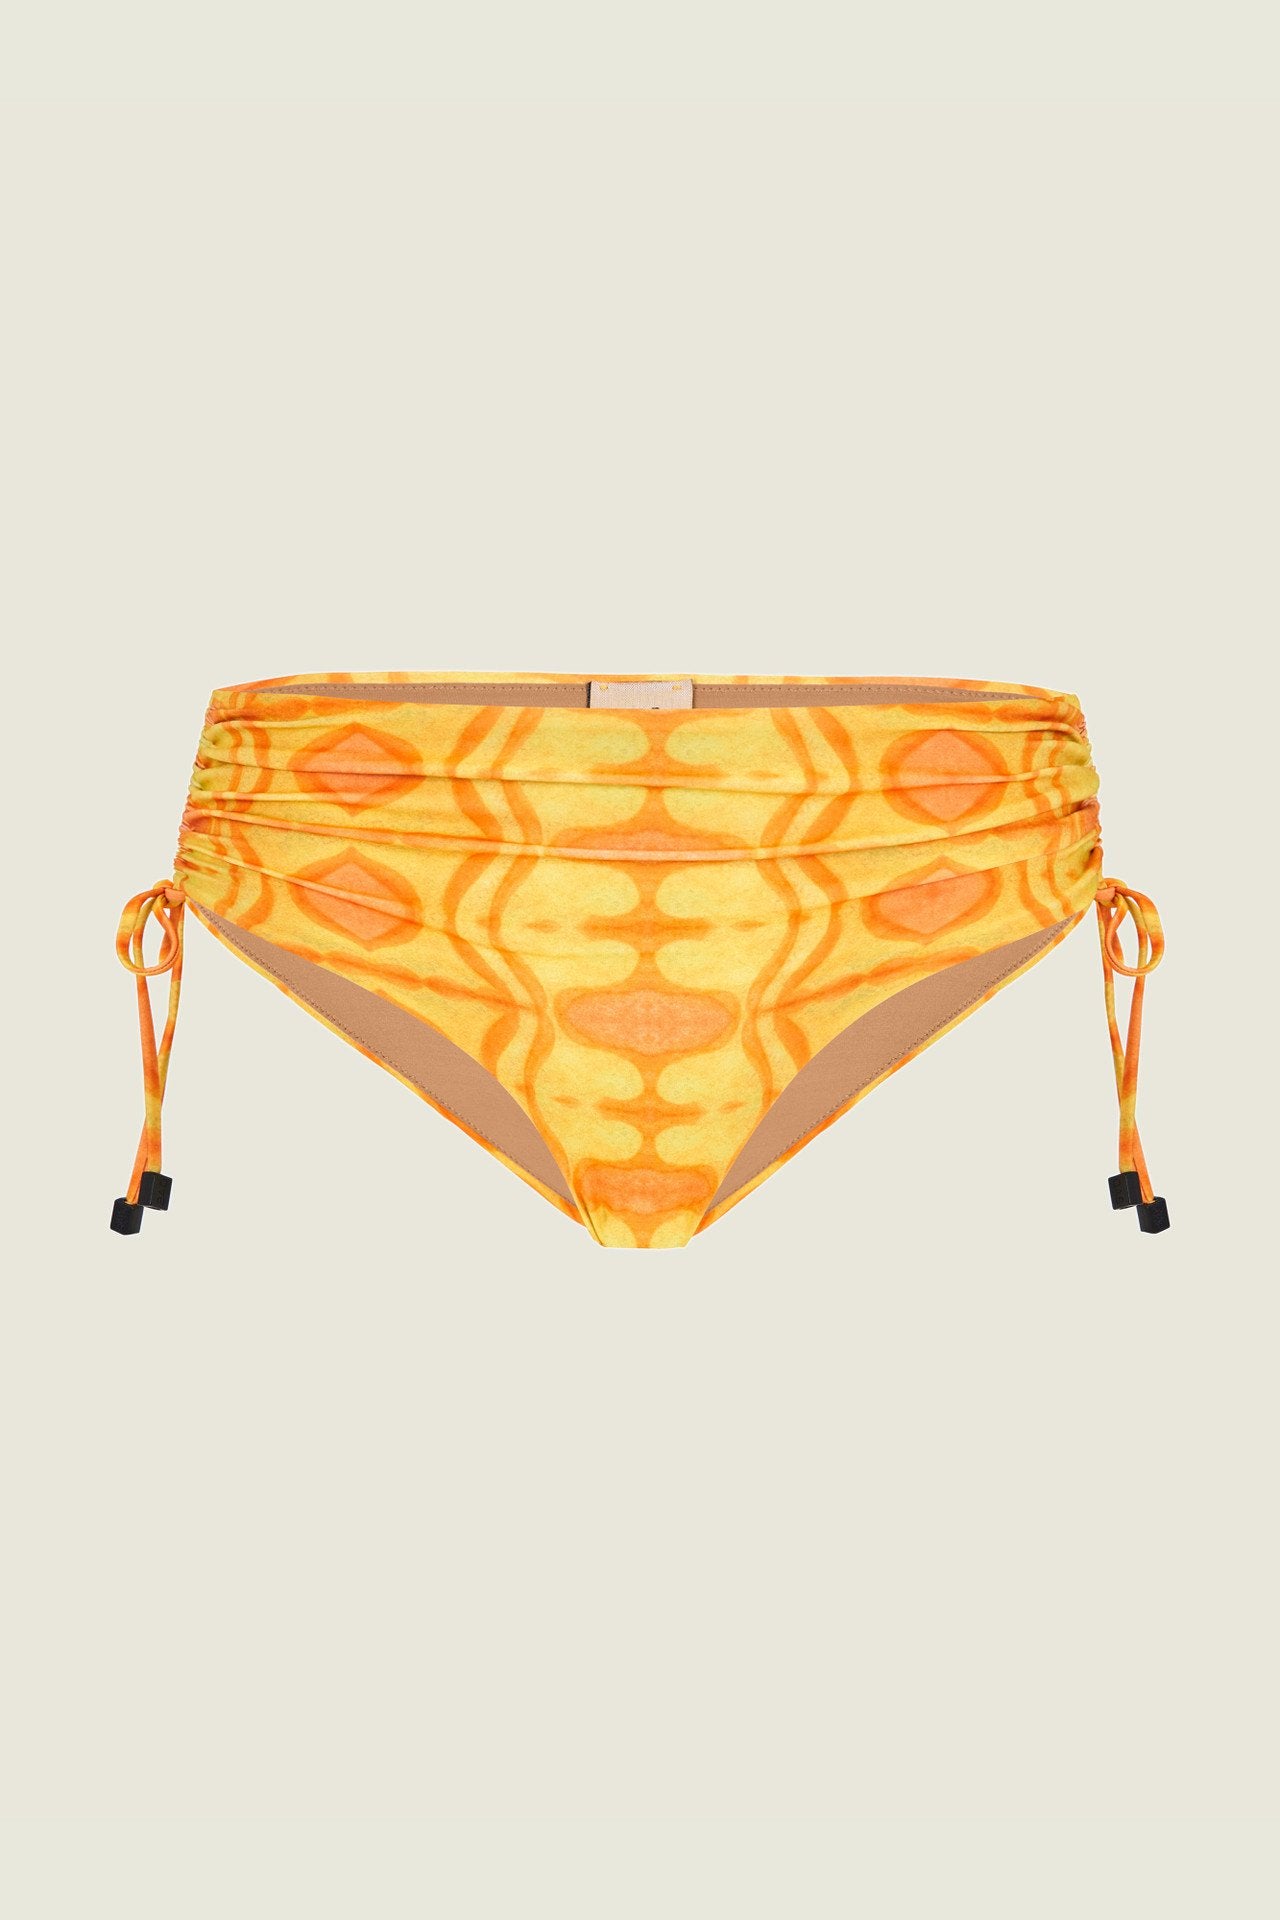 Sunny Garden Ombra Bikini Bottom